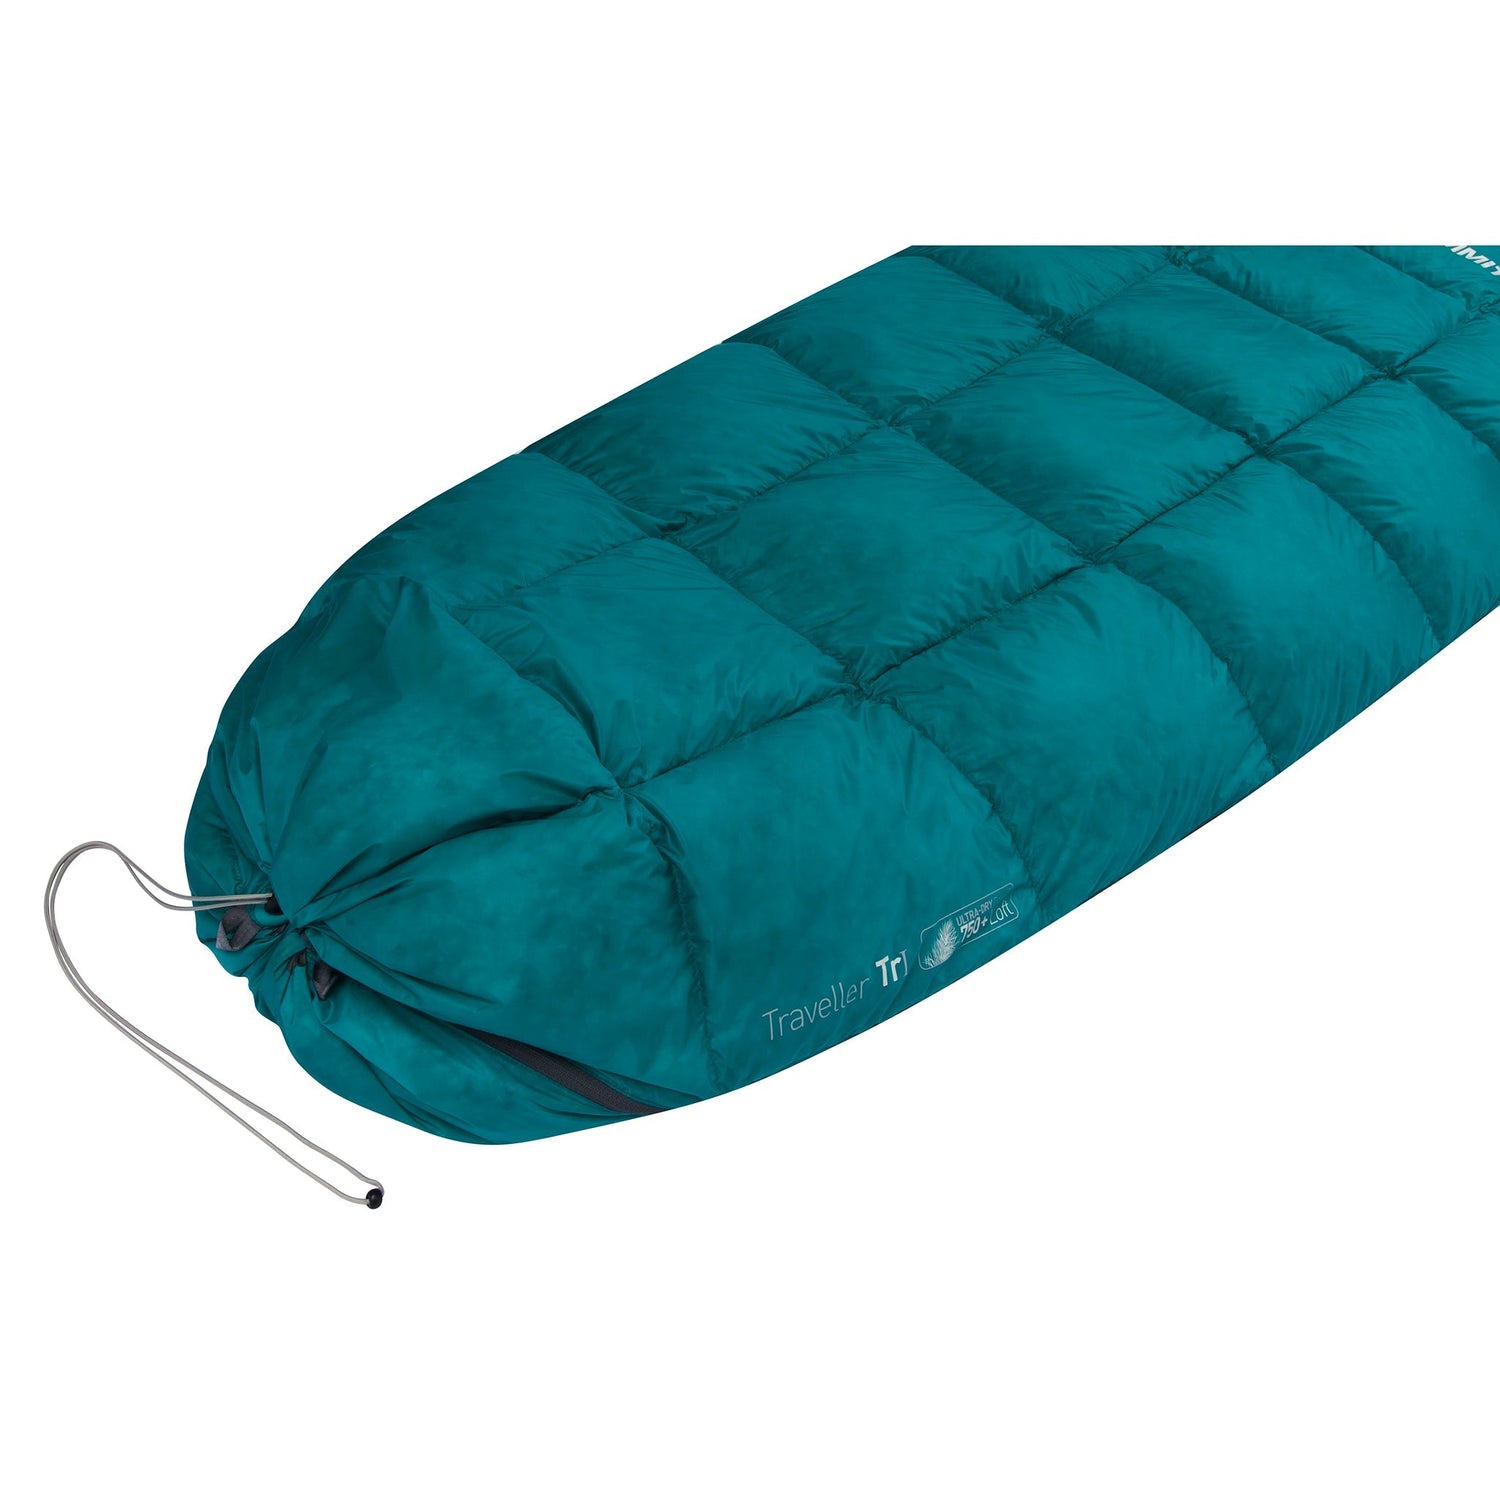 Traveller Sleeping Bag & Blanket (-1°C)